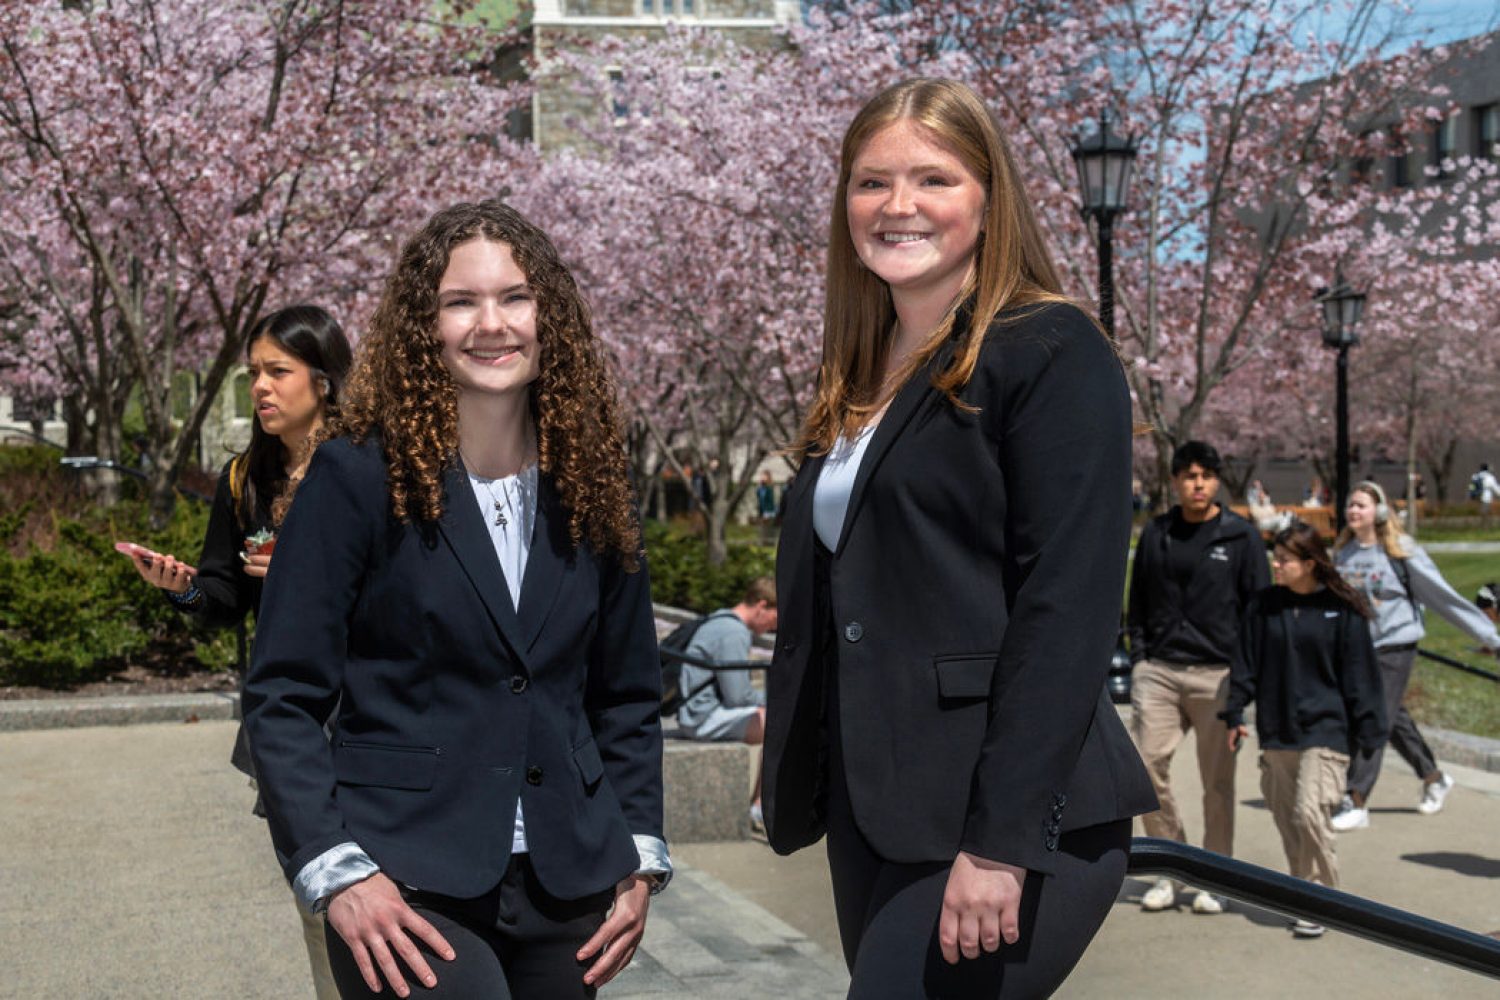 Meghan Heckelman and Katie Garrigan on campus in front of flowering cherry trees